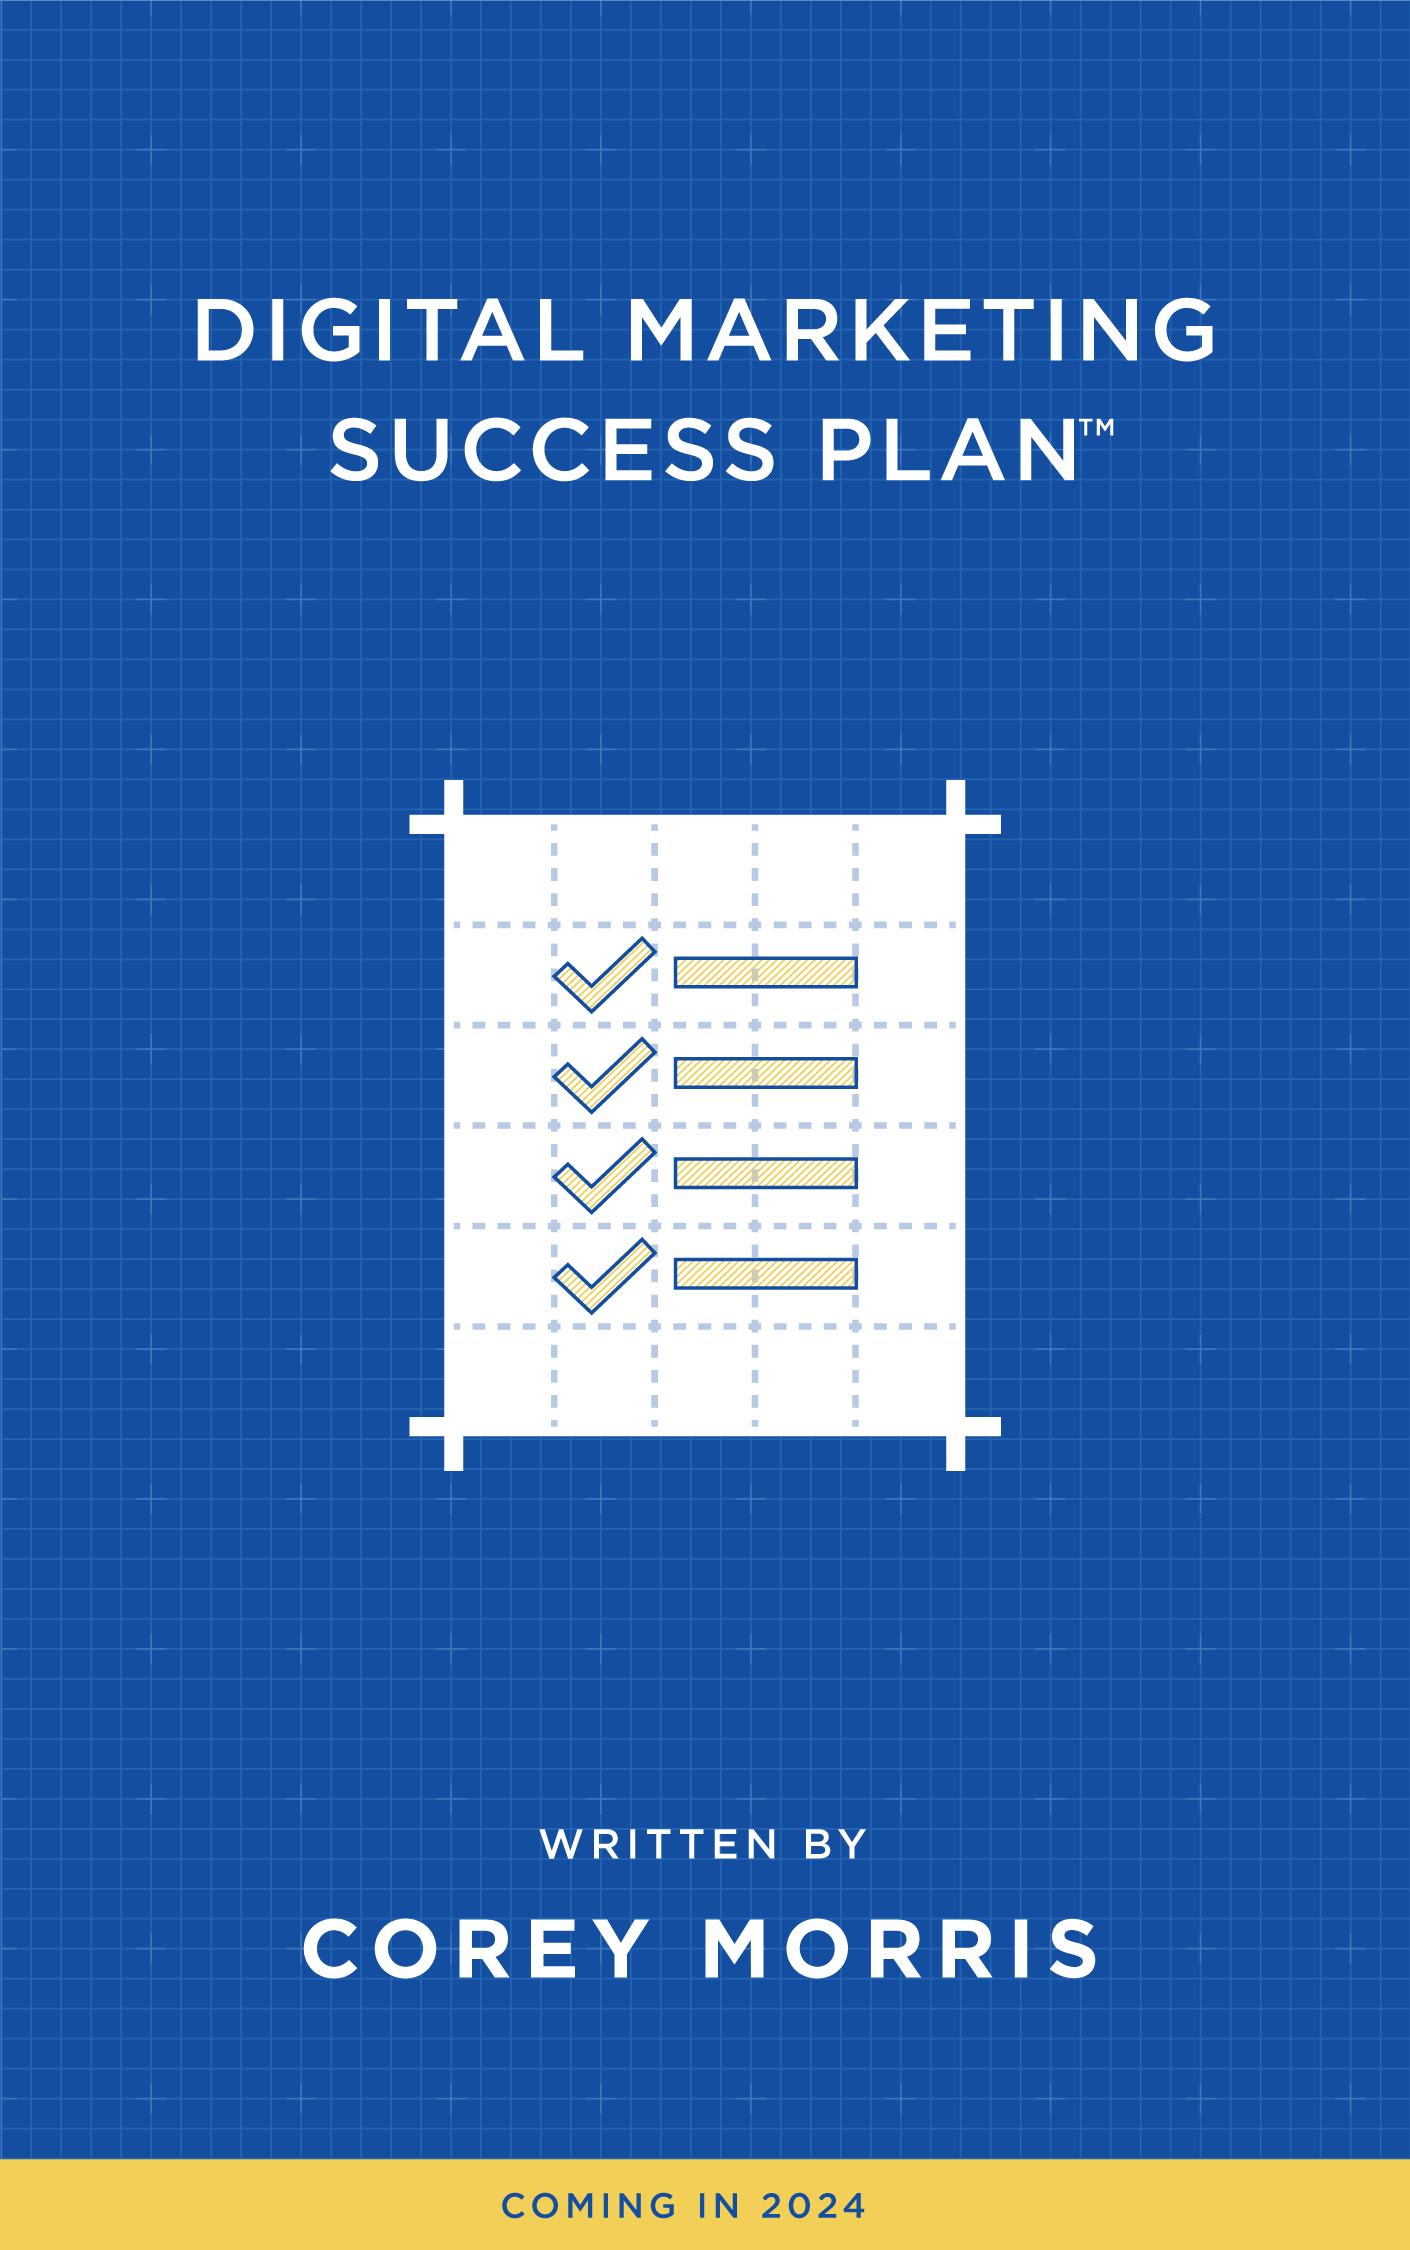 Digital Marketing Success Plan™ by Corey Morris